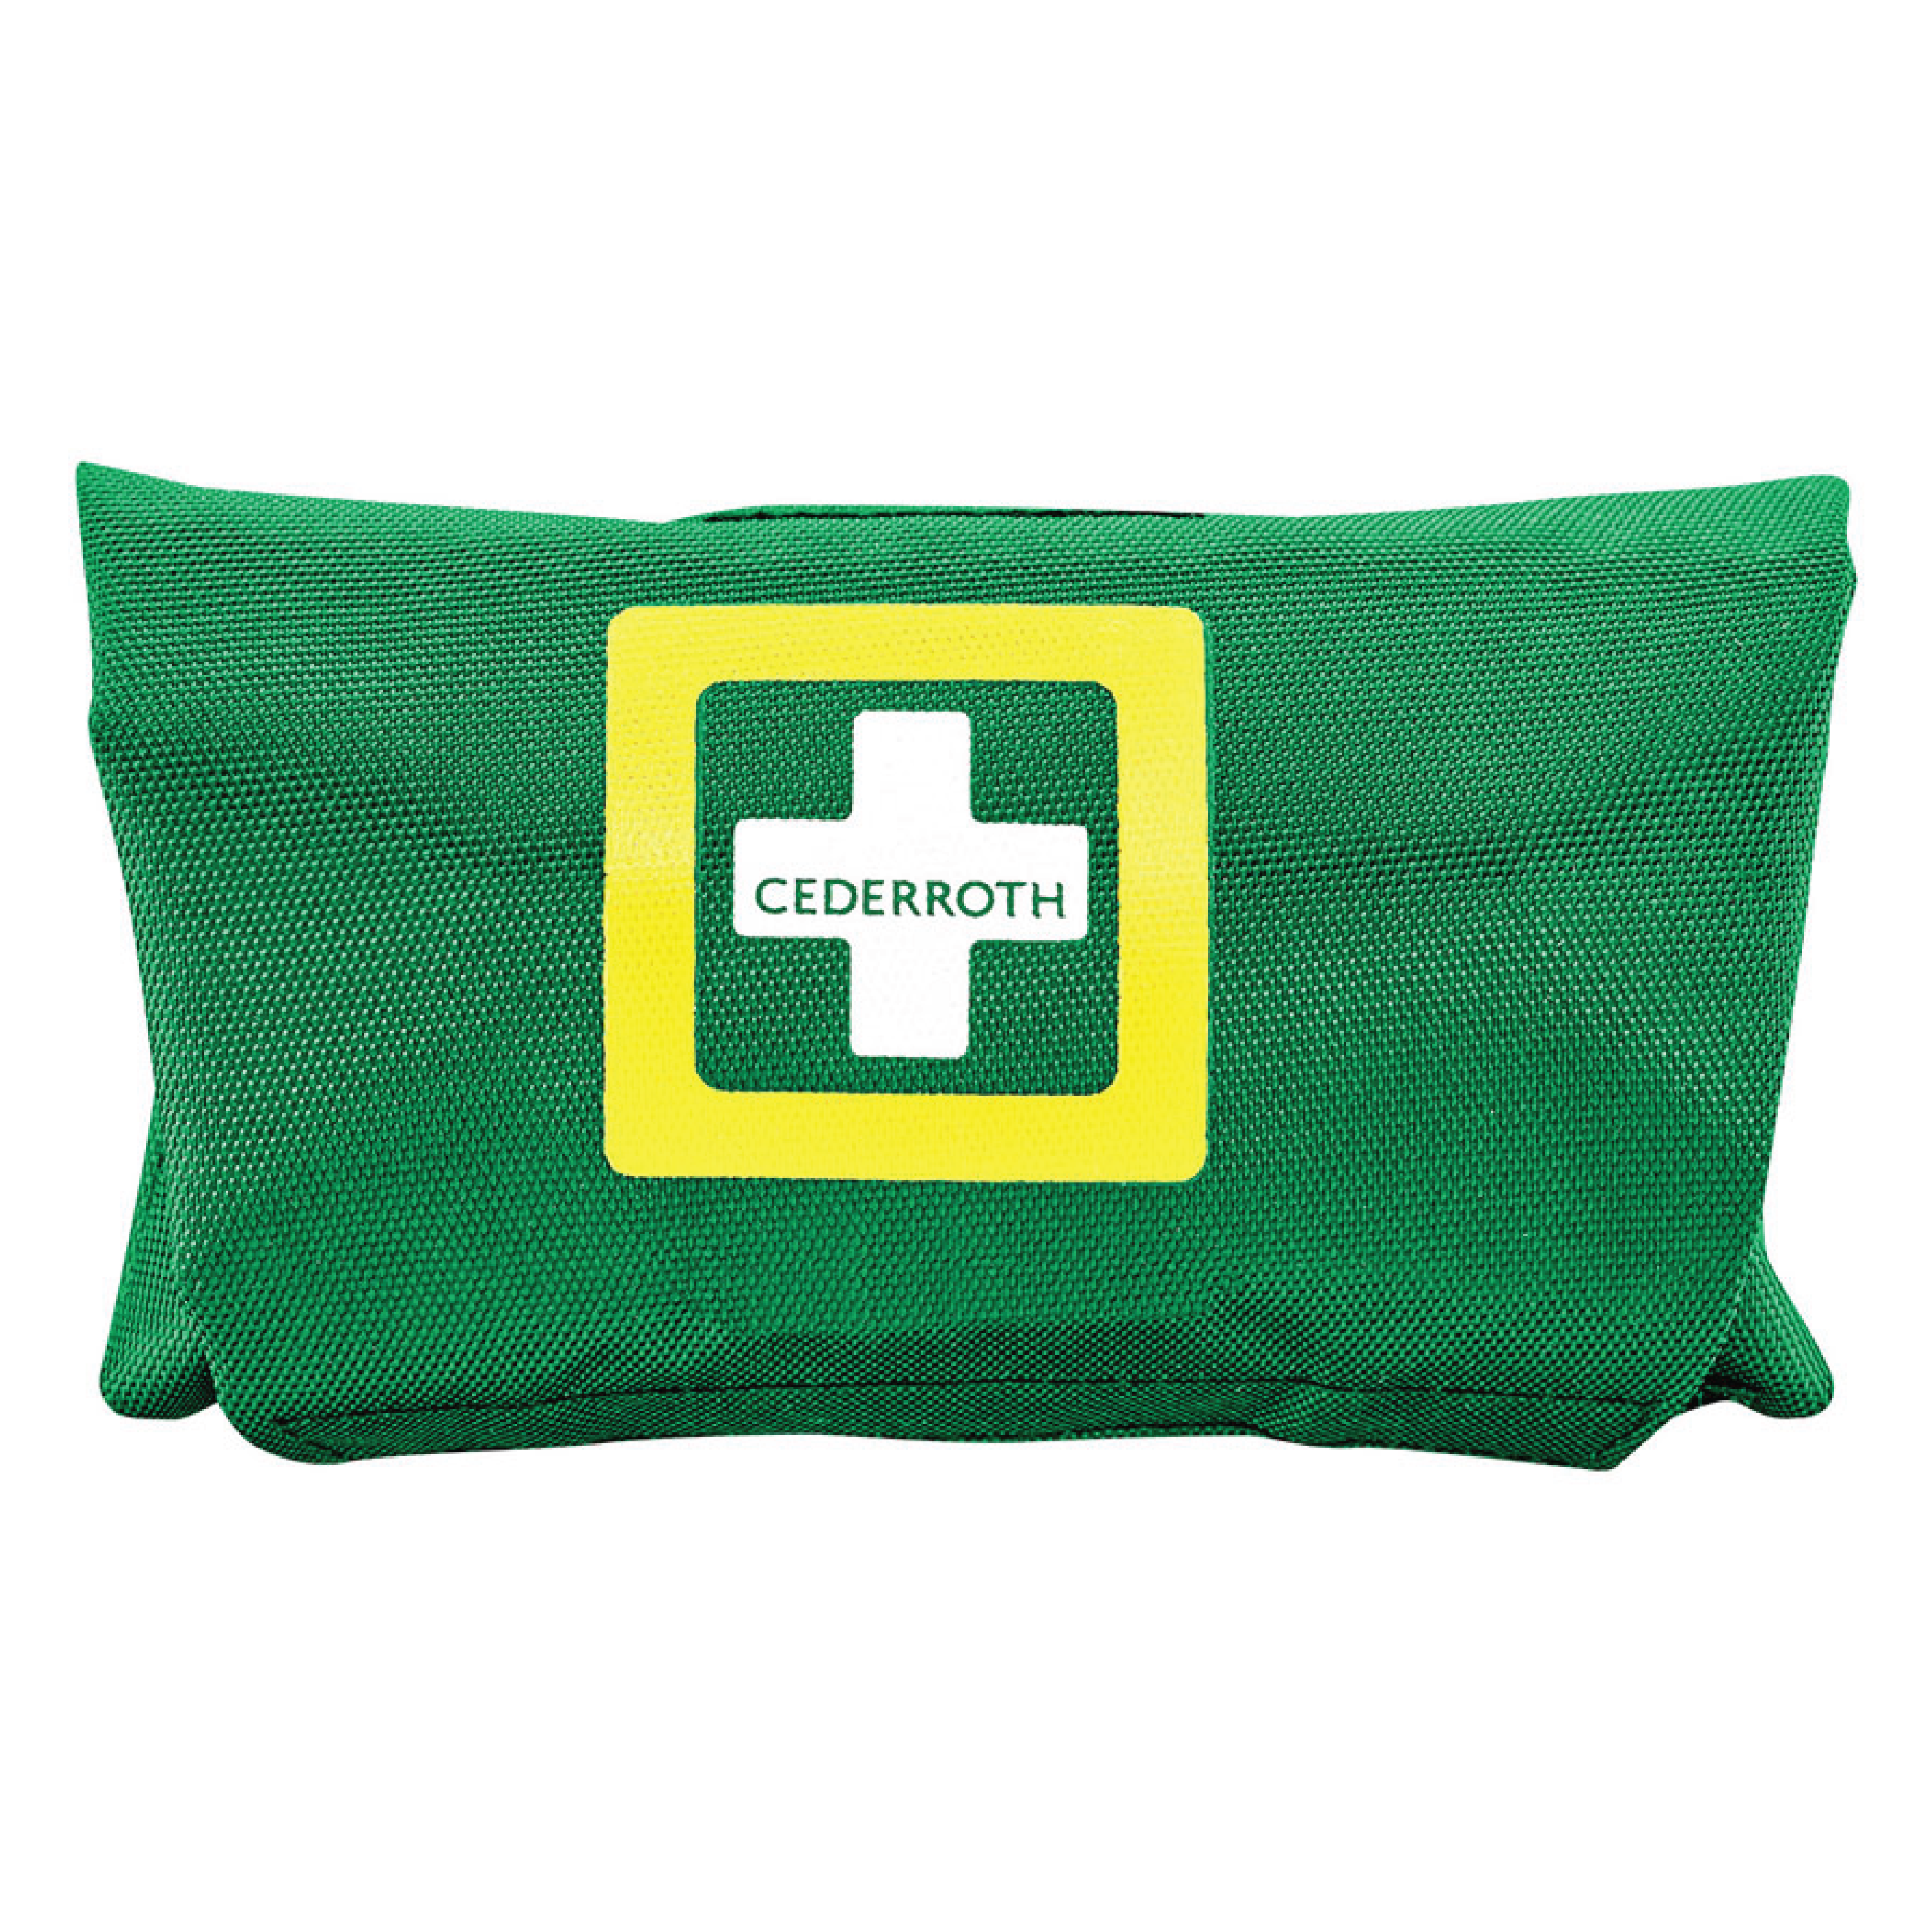 Cederroth First Aid Kit Small Førstehjelpsveske, 1 stk.